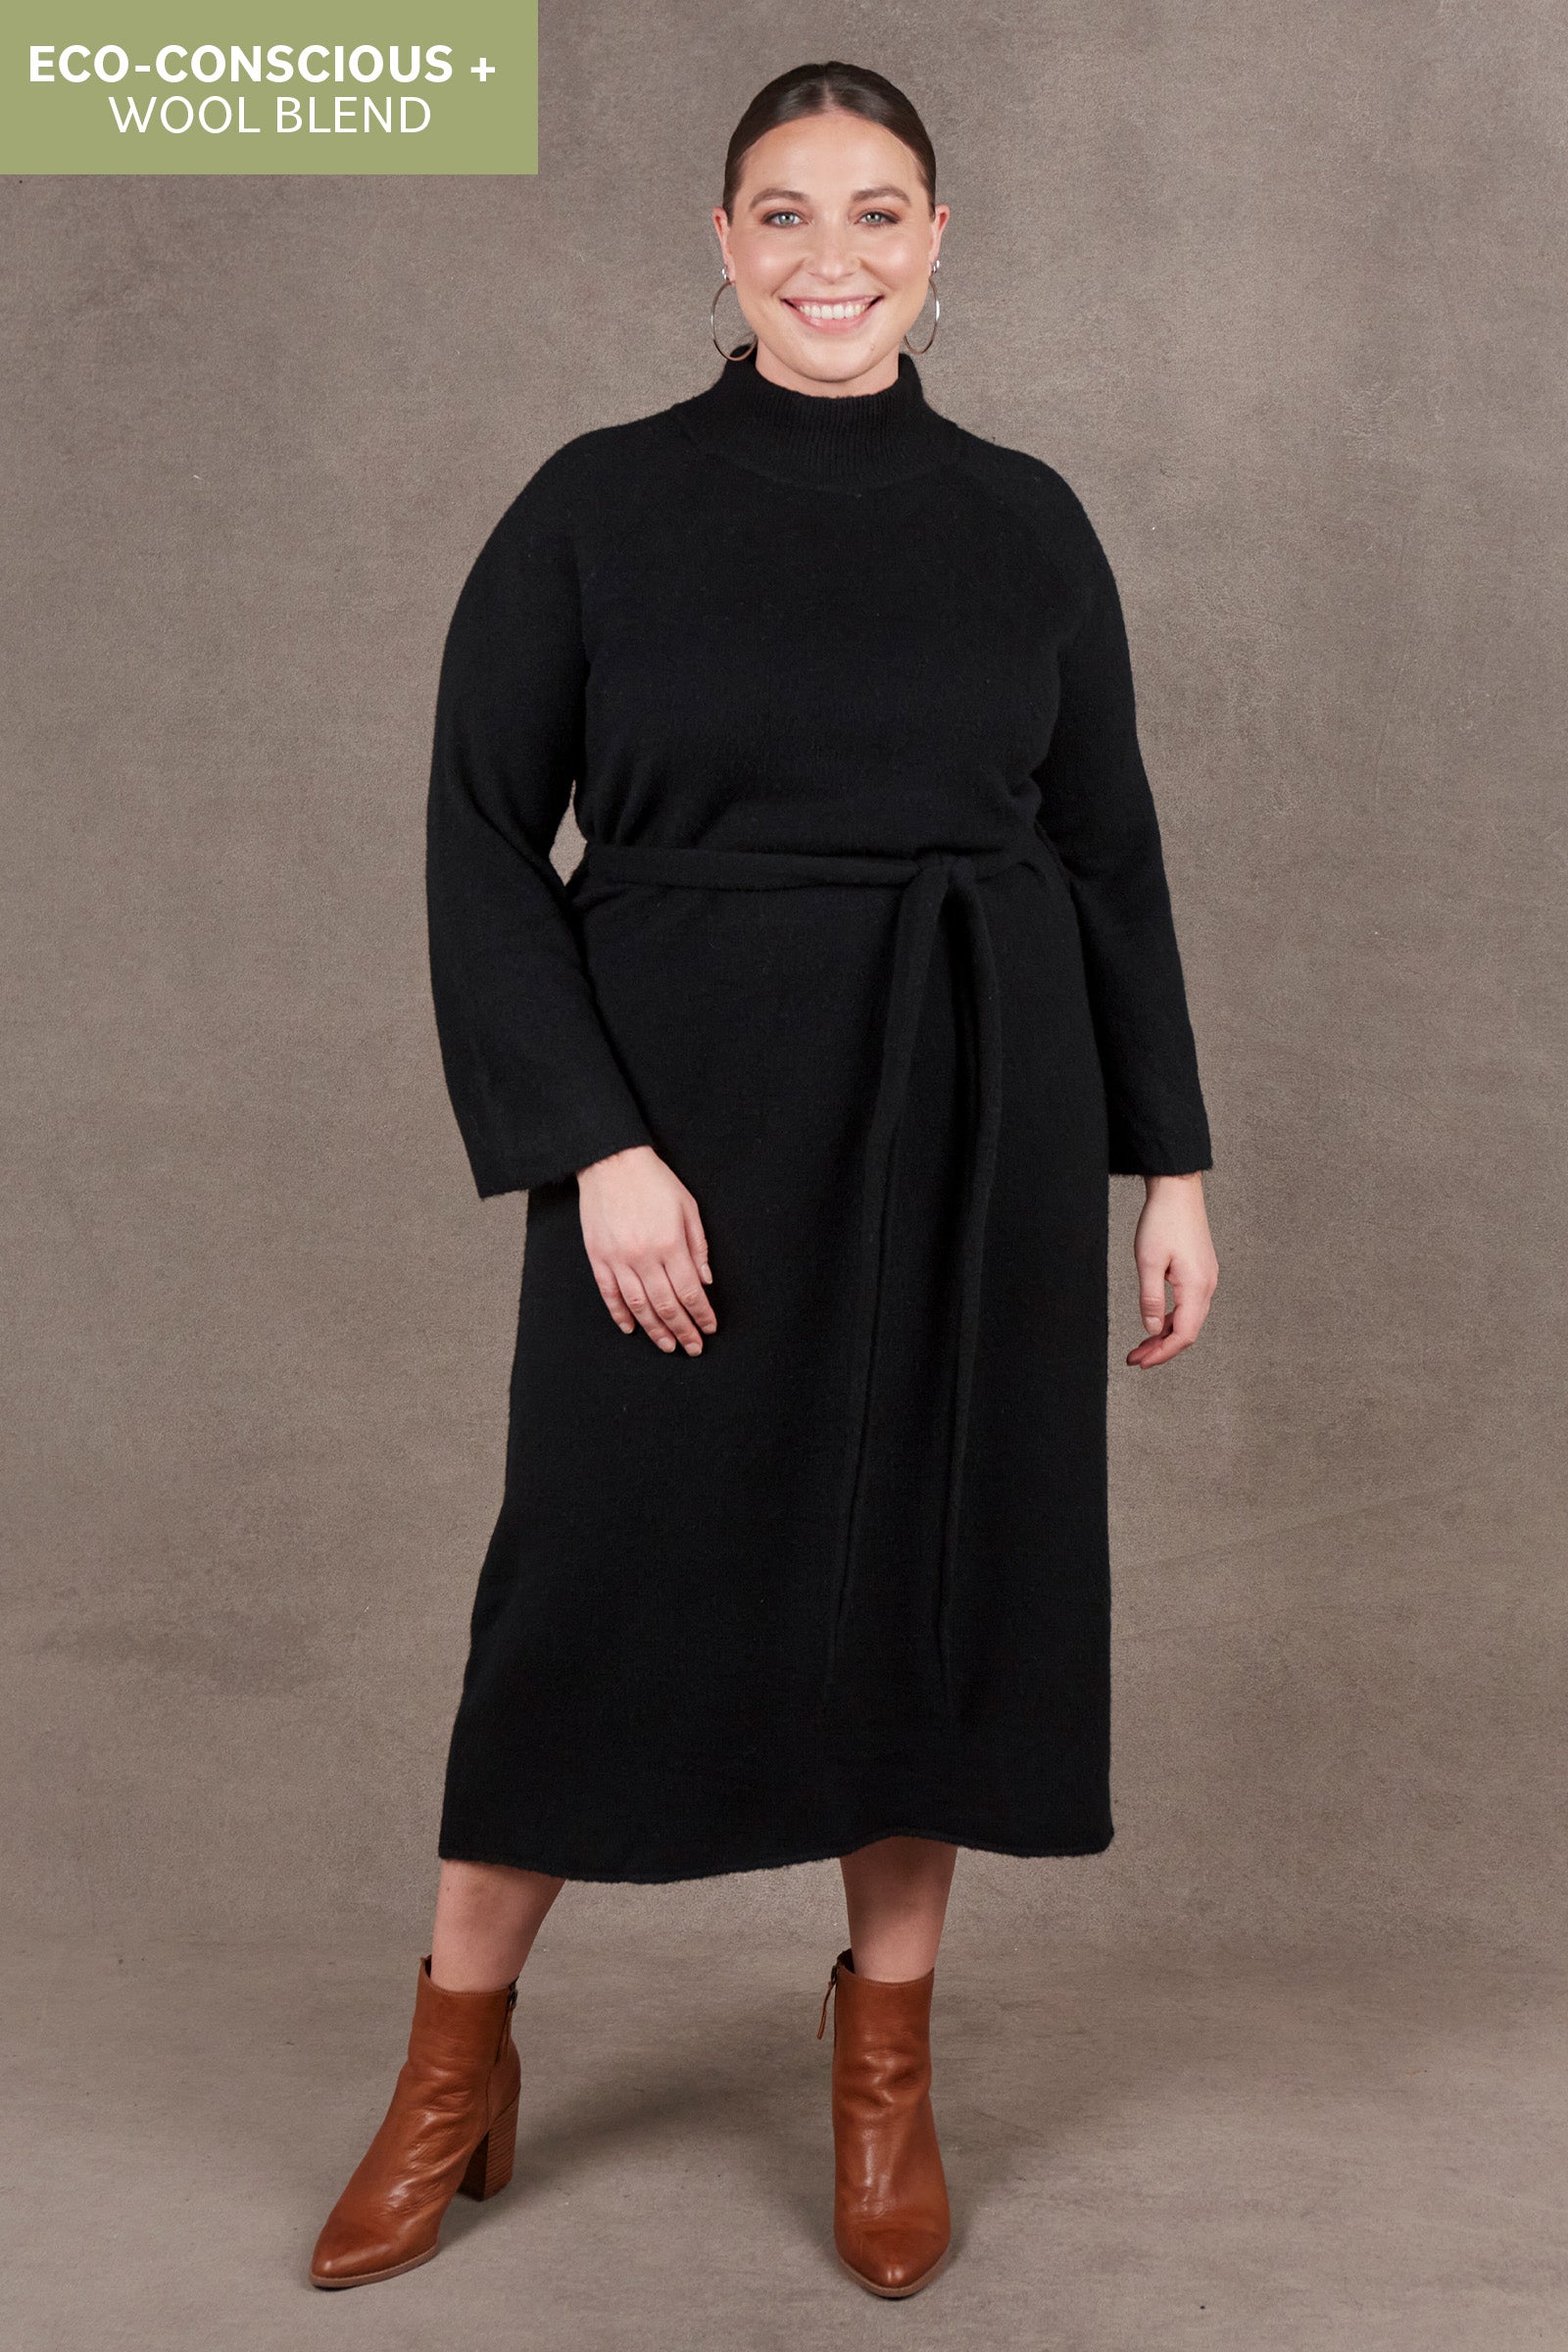 Paarl Tie Knit Dress - Ebony - eb&ive Clothing - Knit Dress One Size